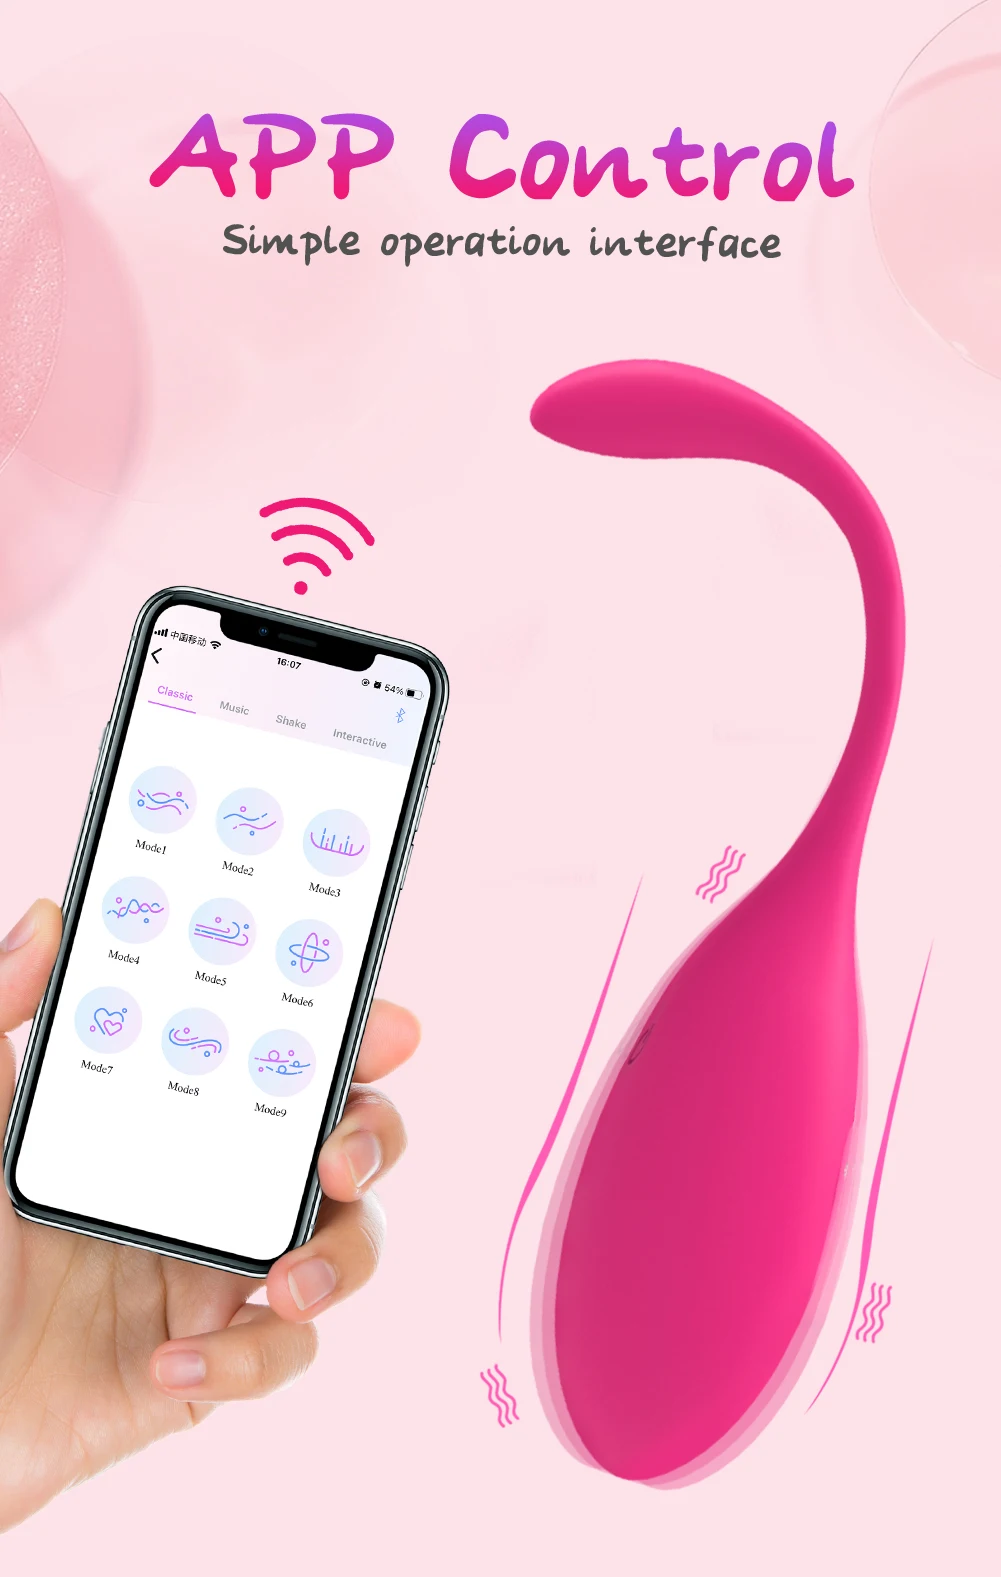 Levett App Sex Toys G Spot 9 Vibrating Modes Phone App Wifi Wireless Remote Control Bt Vibrator